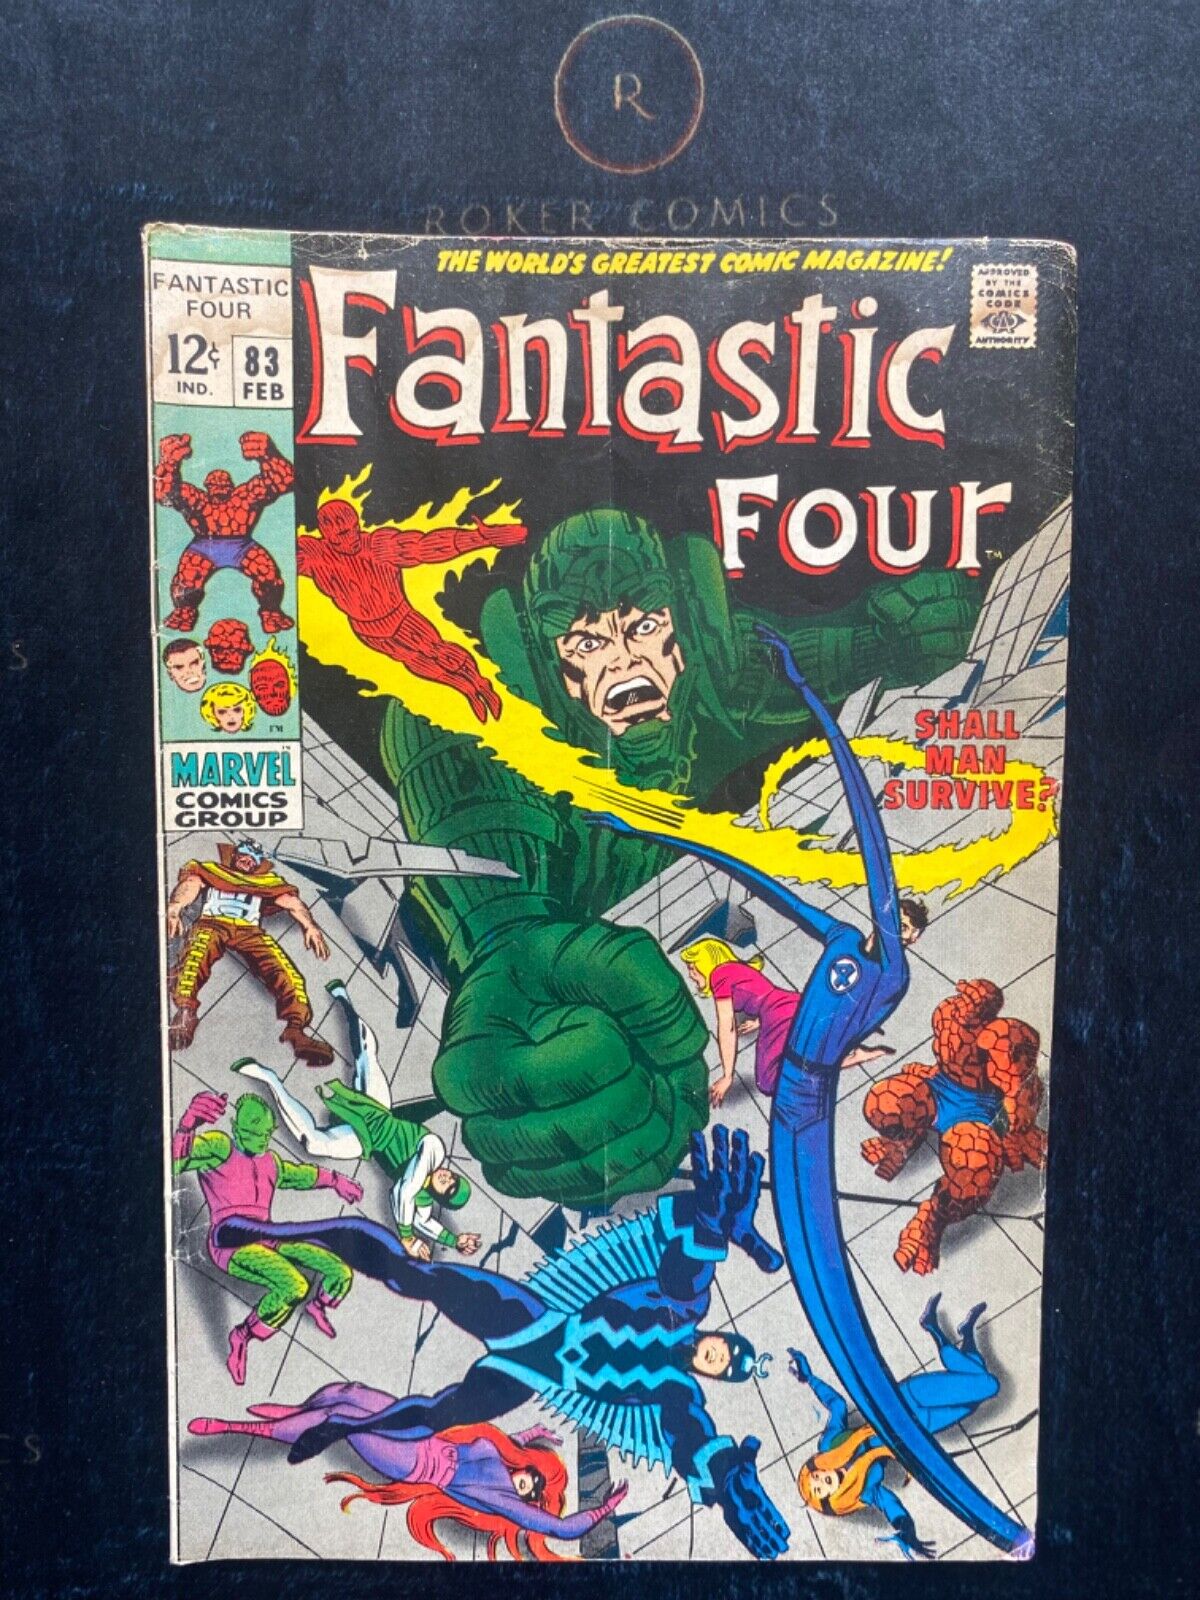 RARE VG+ 1969 Fantastic Four #83